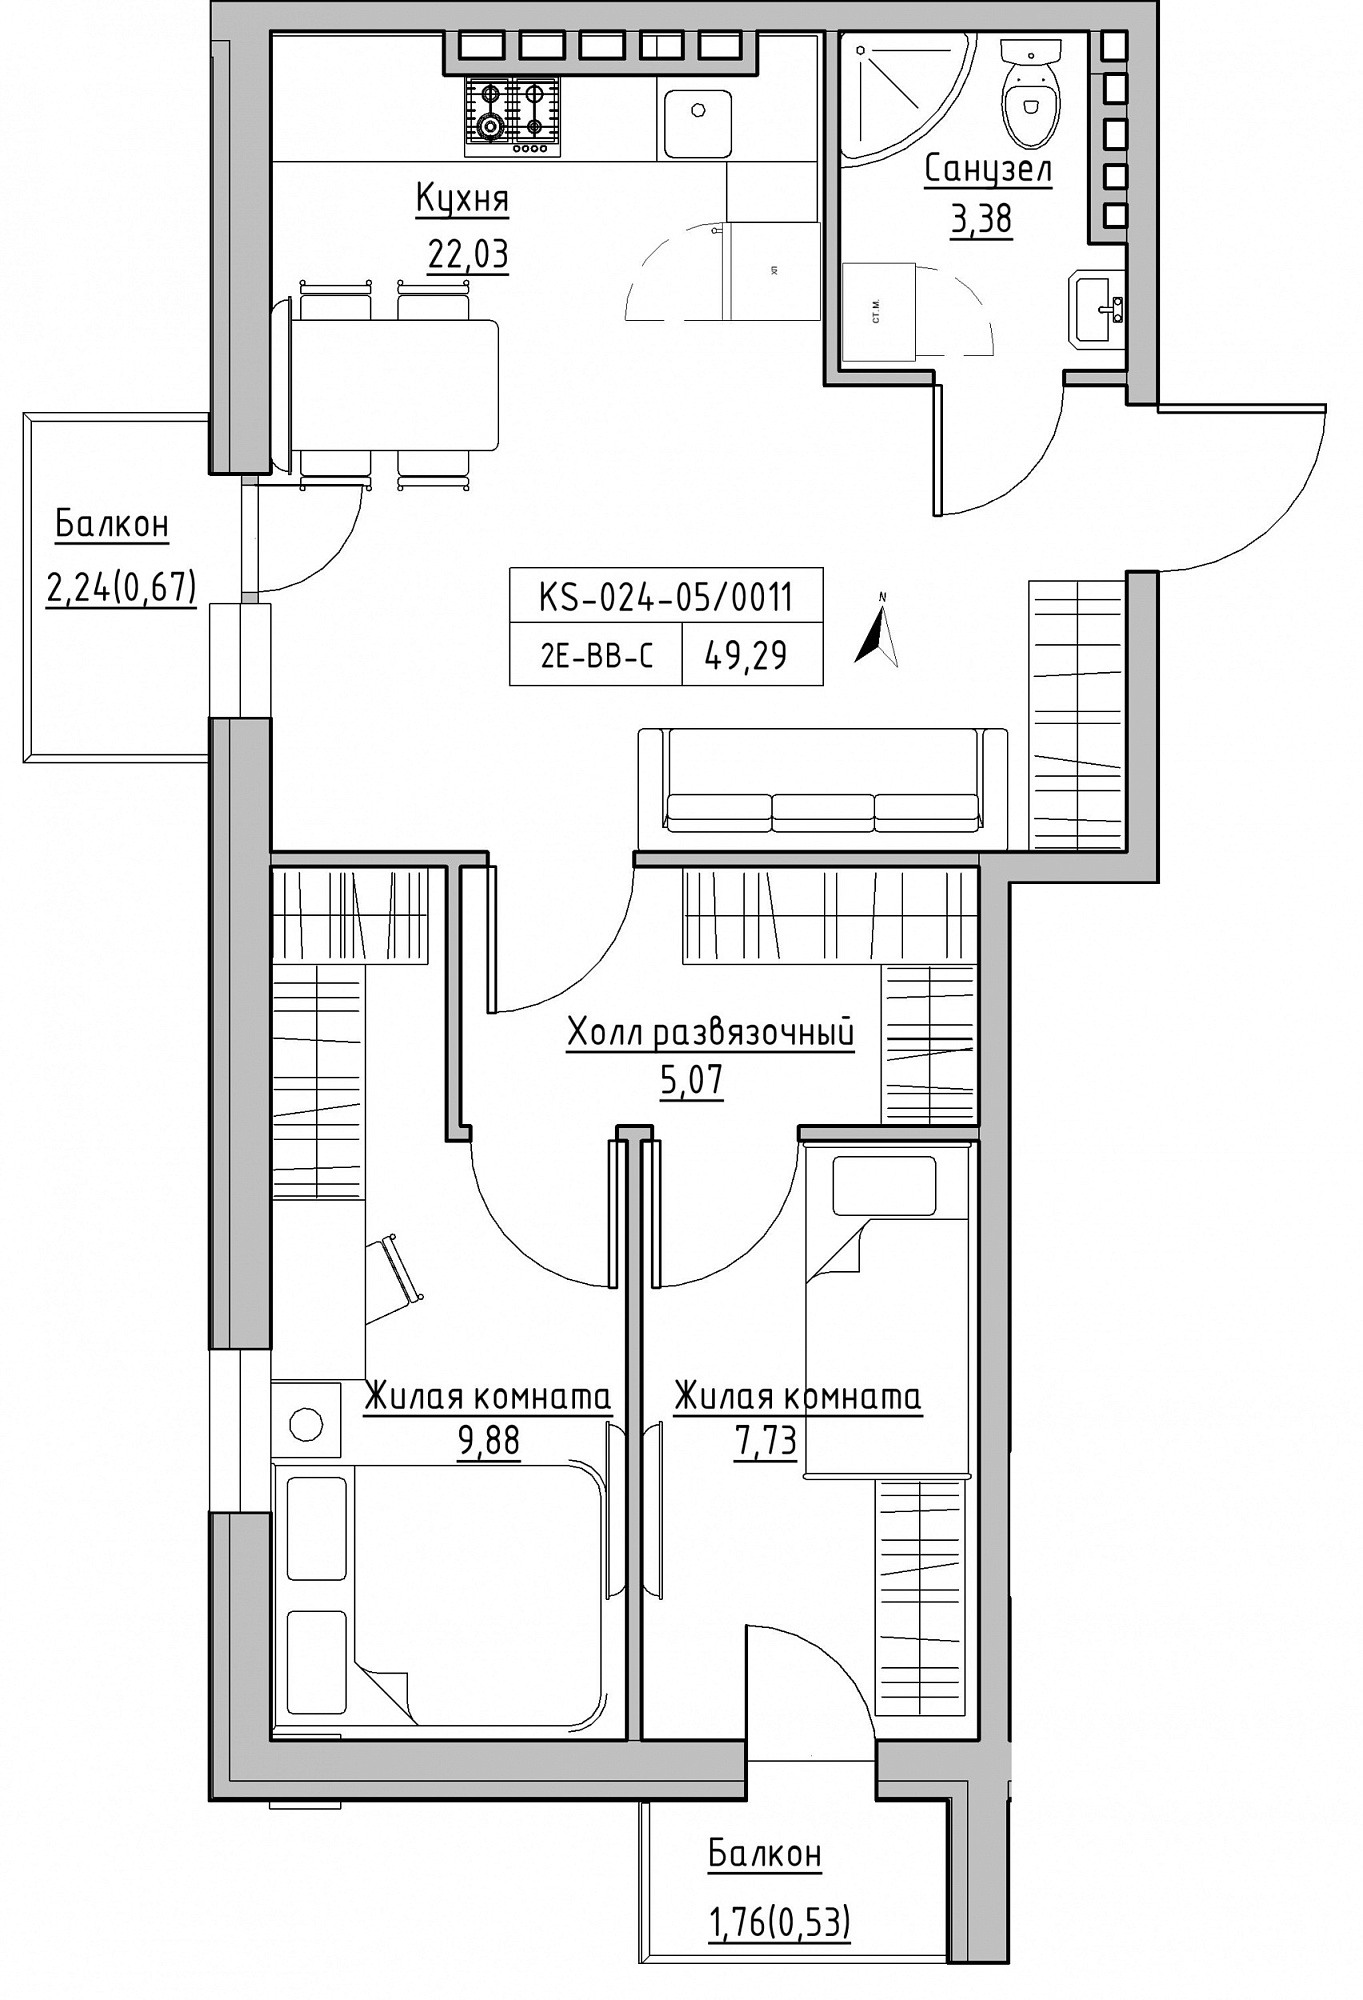 Planning 2-rm flats area 49.29m2, KS-024-05/0011.